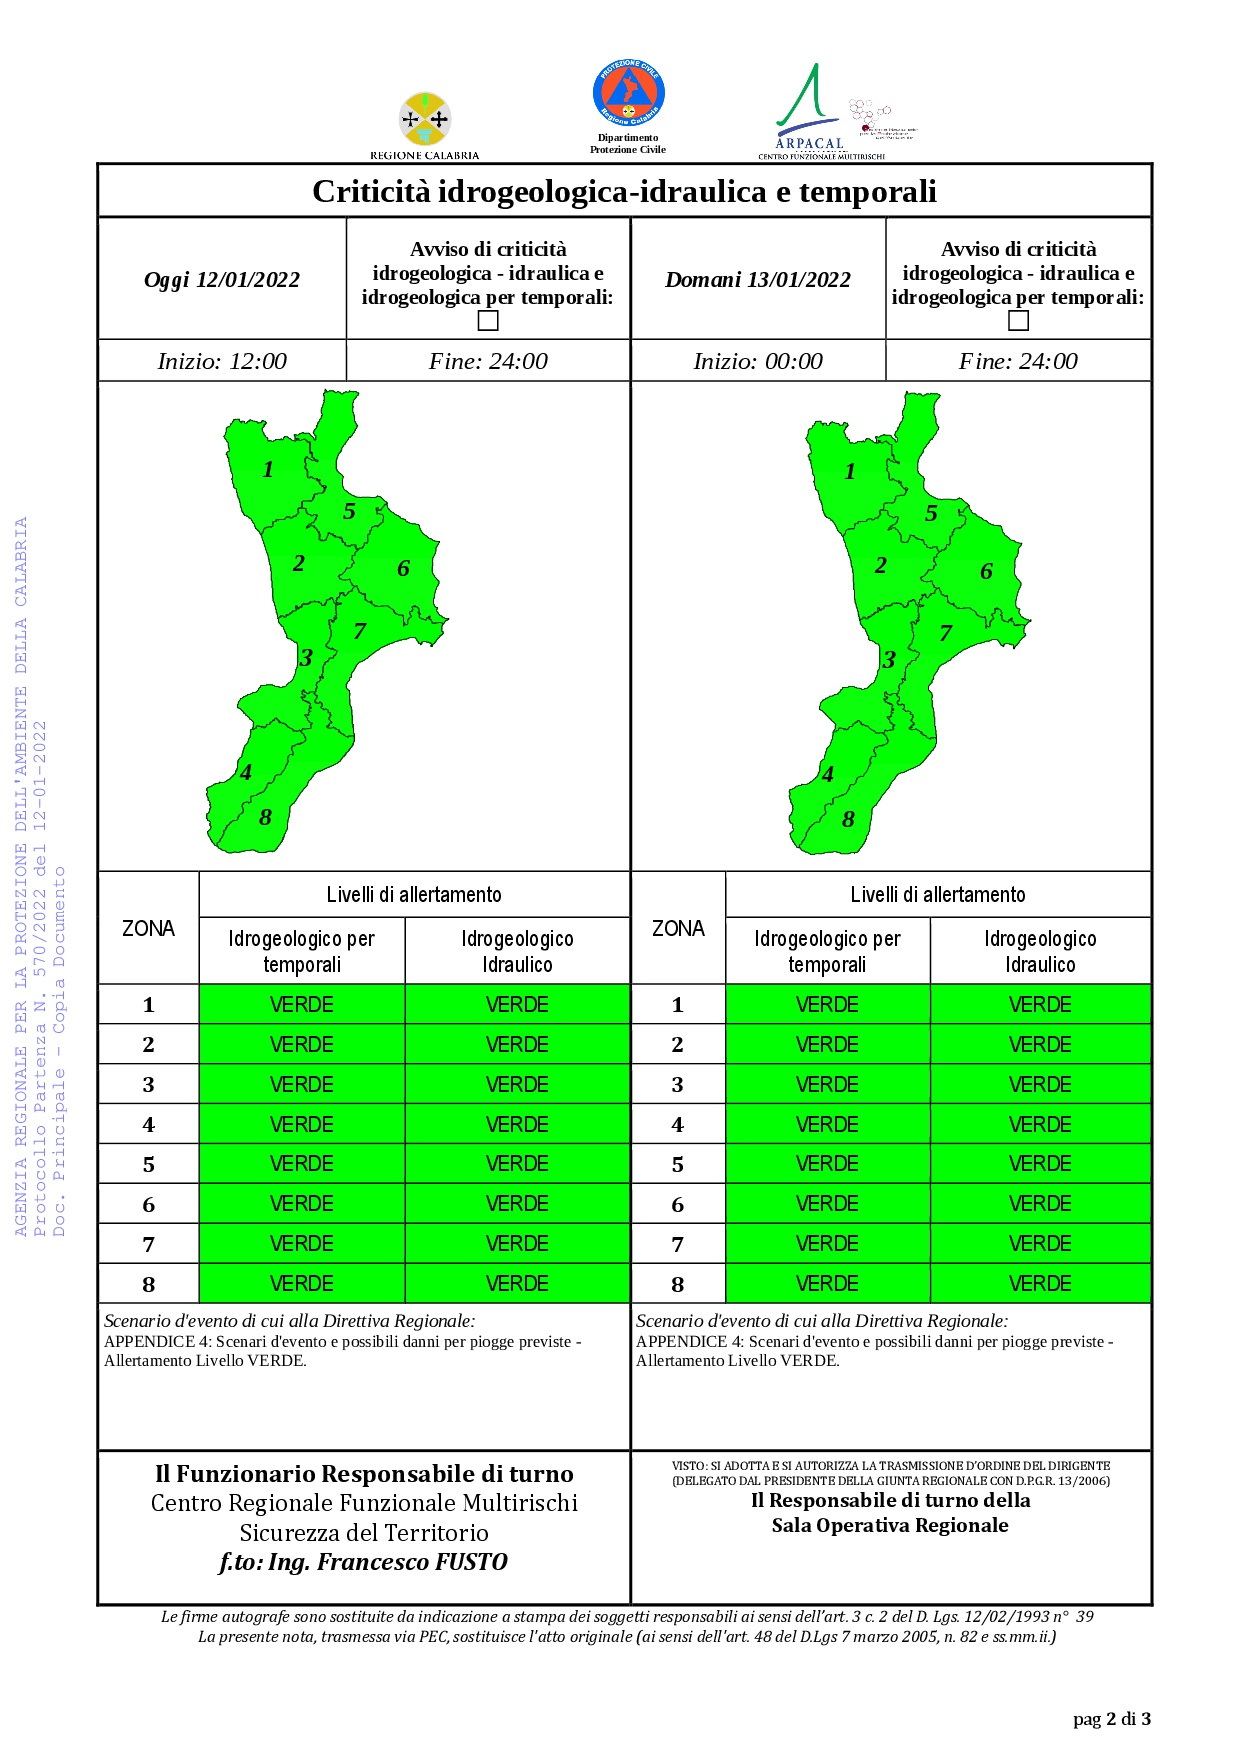 Criticità idrogeologica-idraulica e temporali in Calabria 12-01-2022